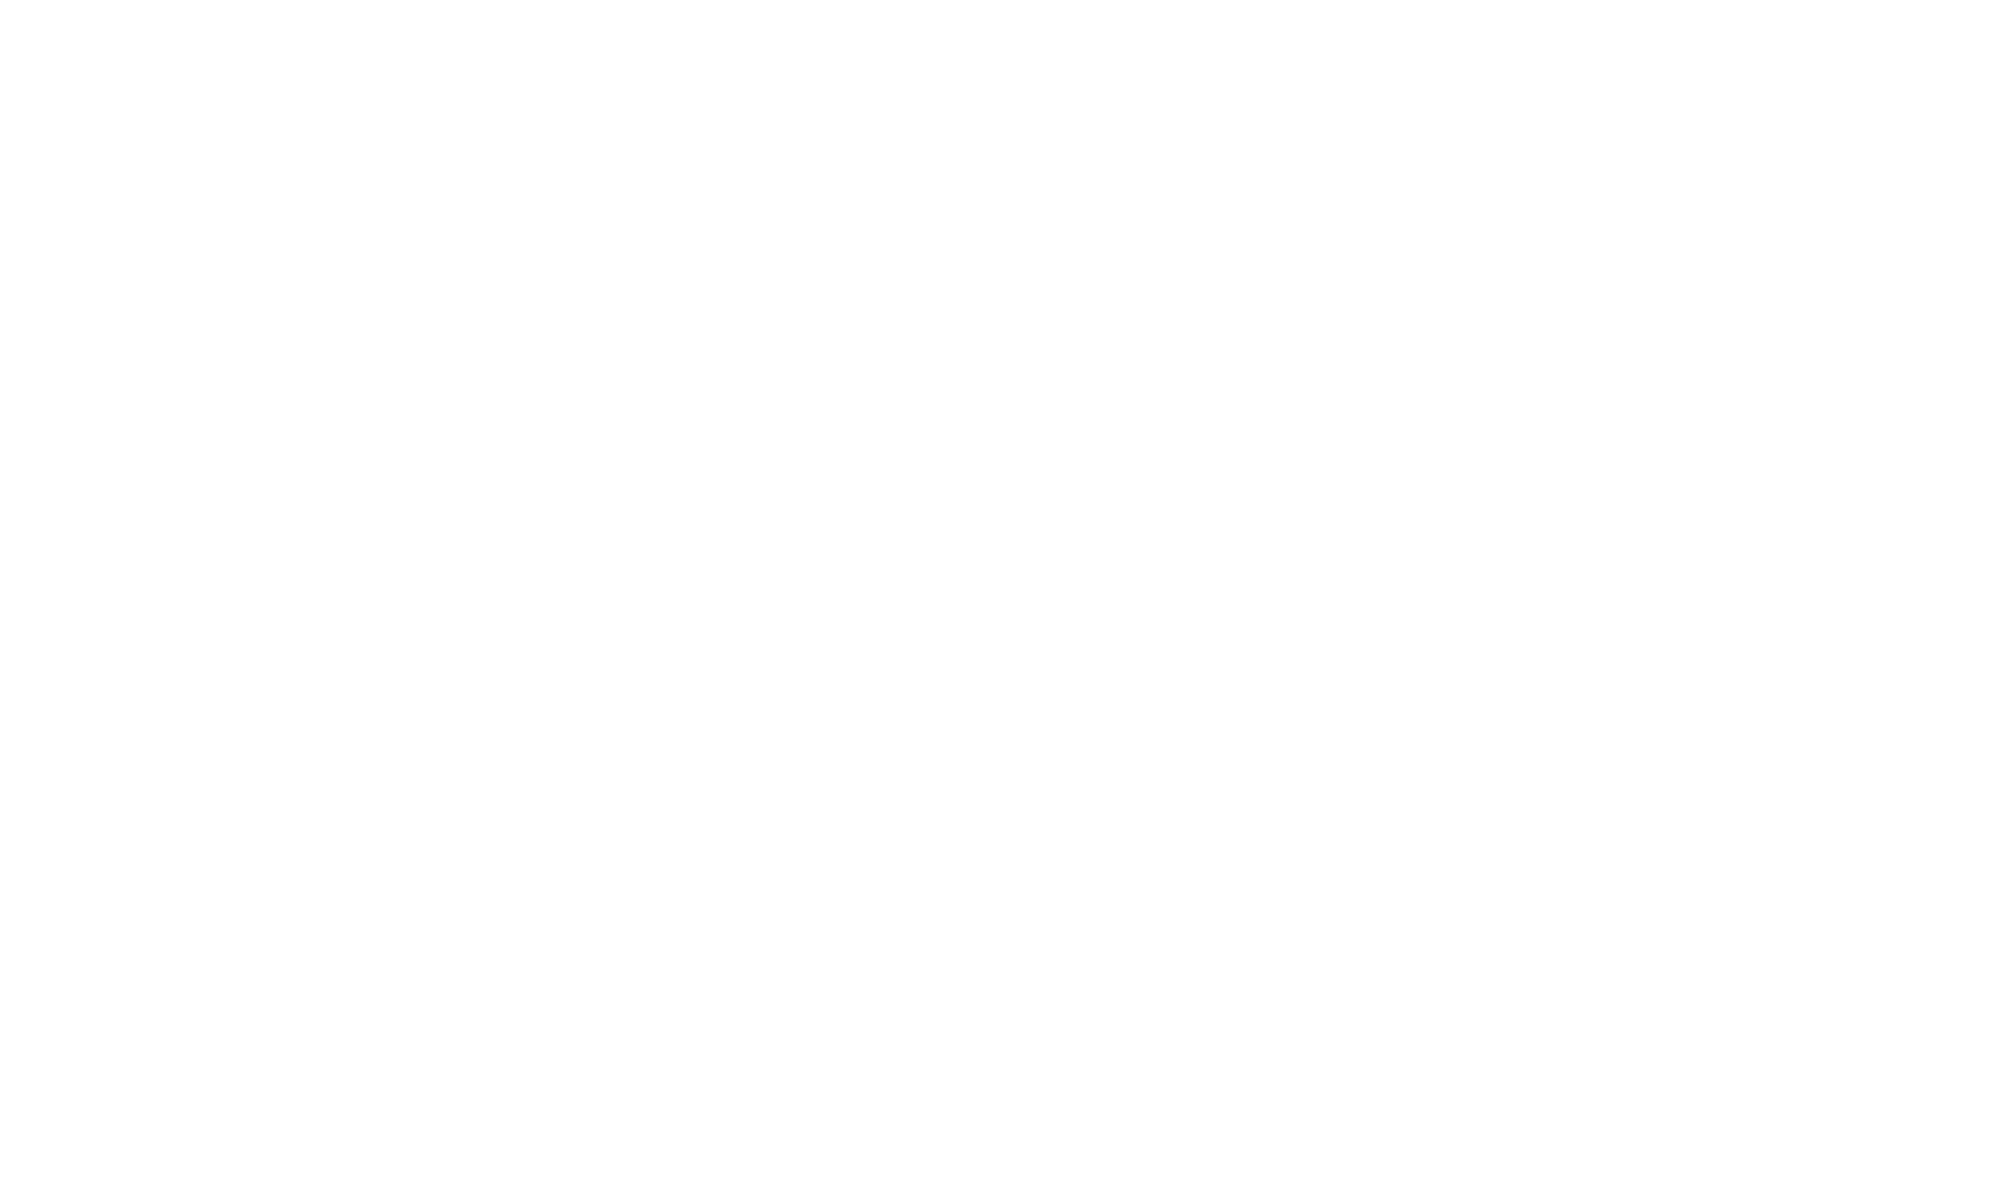 Migros-Logo